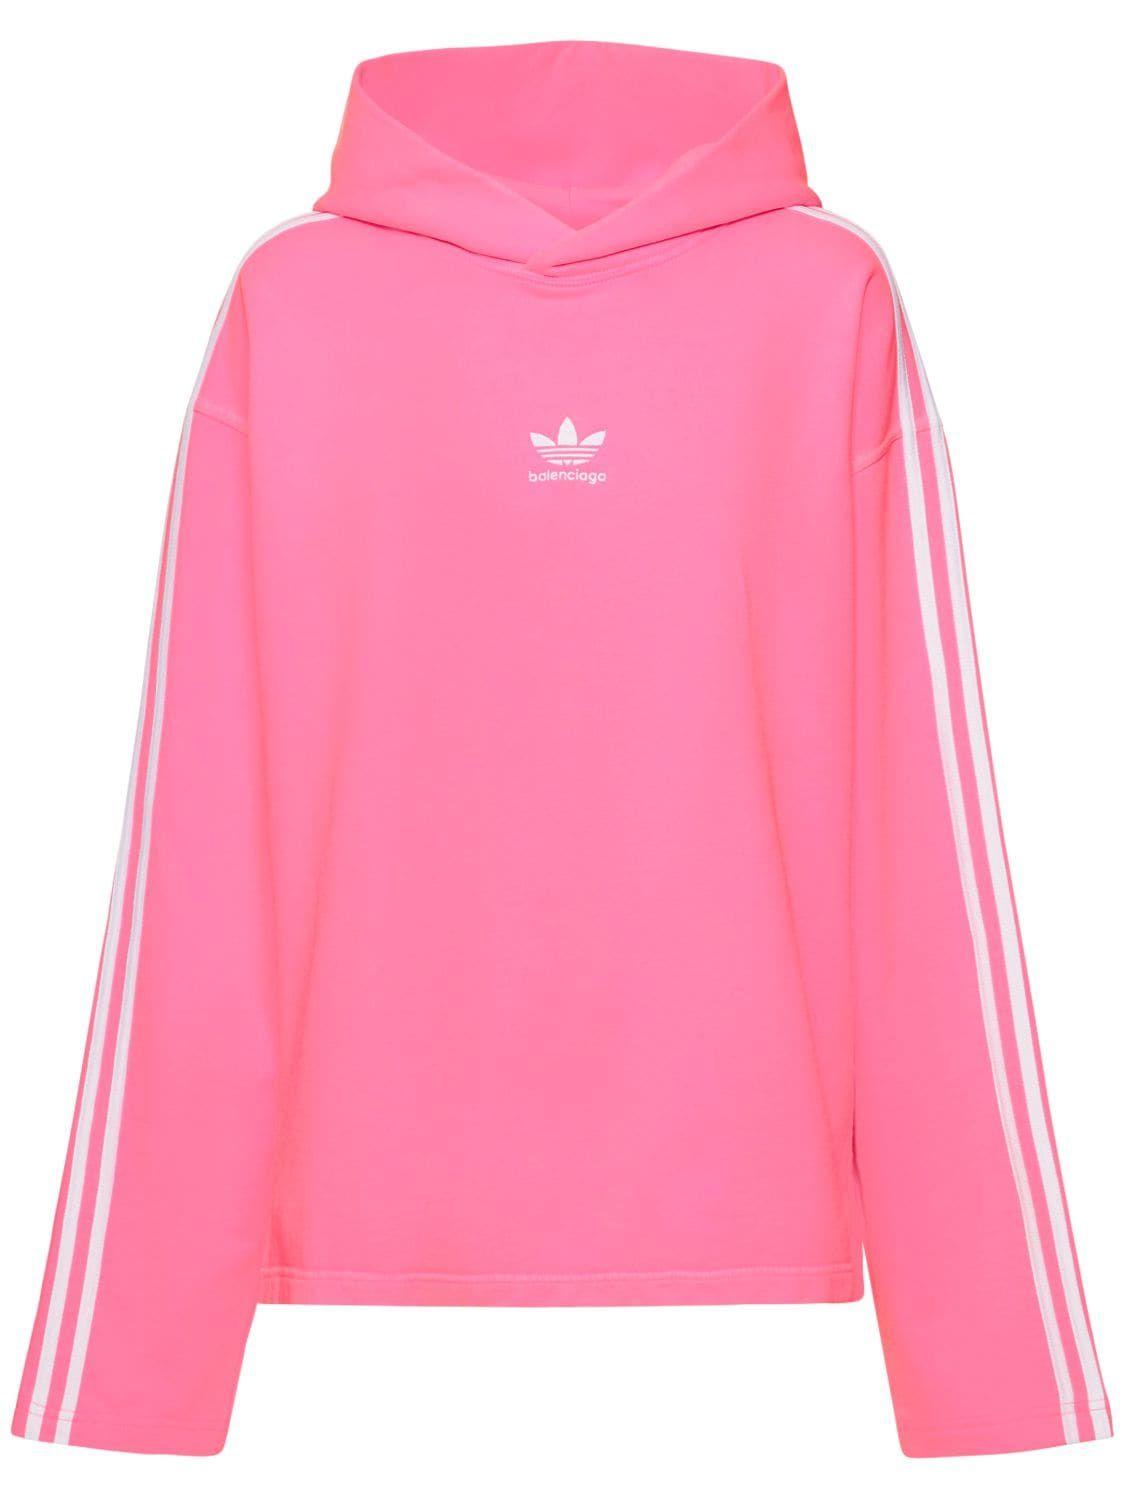 Balenciaga Adidas Cotton Hoodie in Pink | Lyst